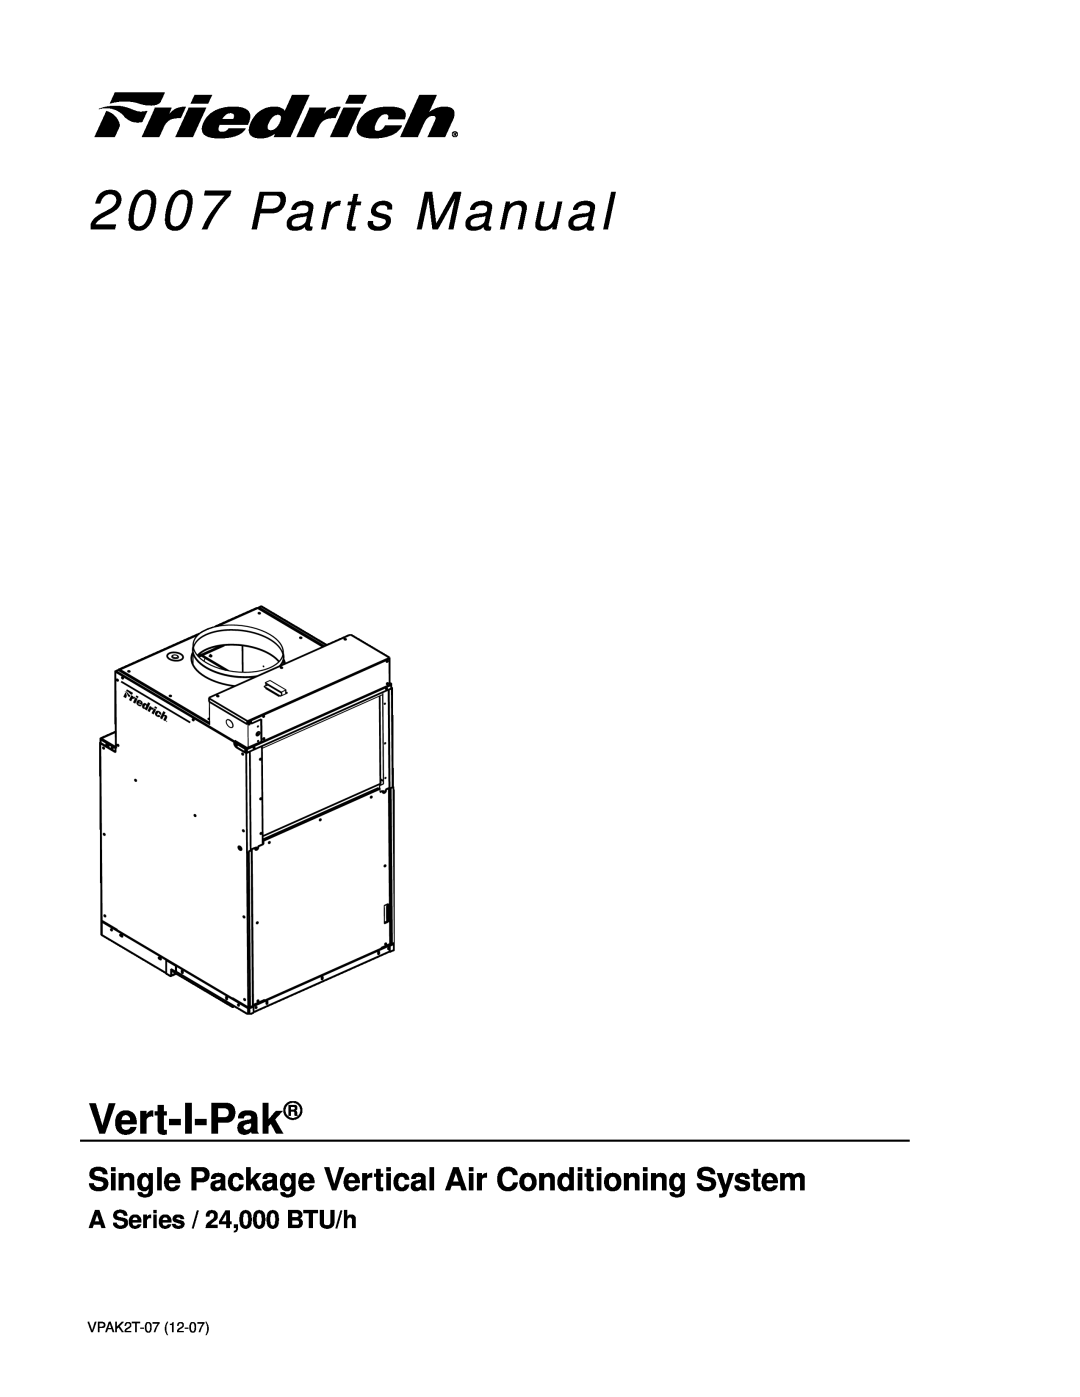 Friedrich 000 BTU/h manual Parts Manual, Vert-I-Pak, Single Package Vertical Air Conditioning System, VPAK2T-07 